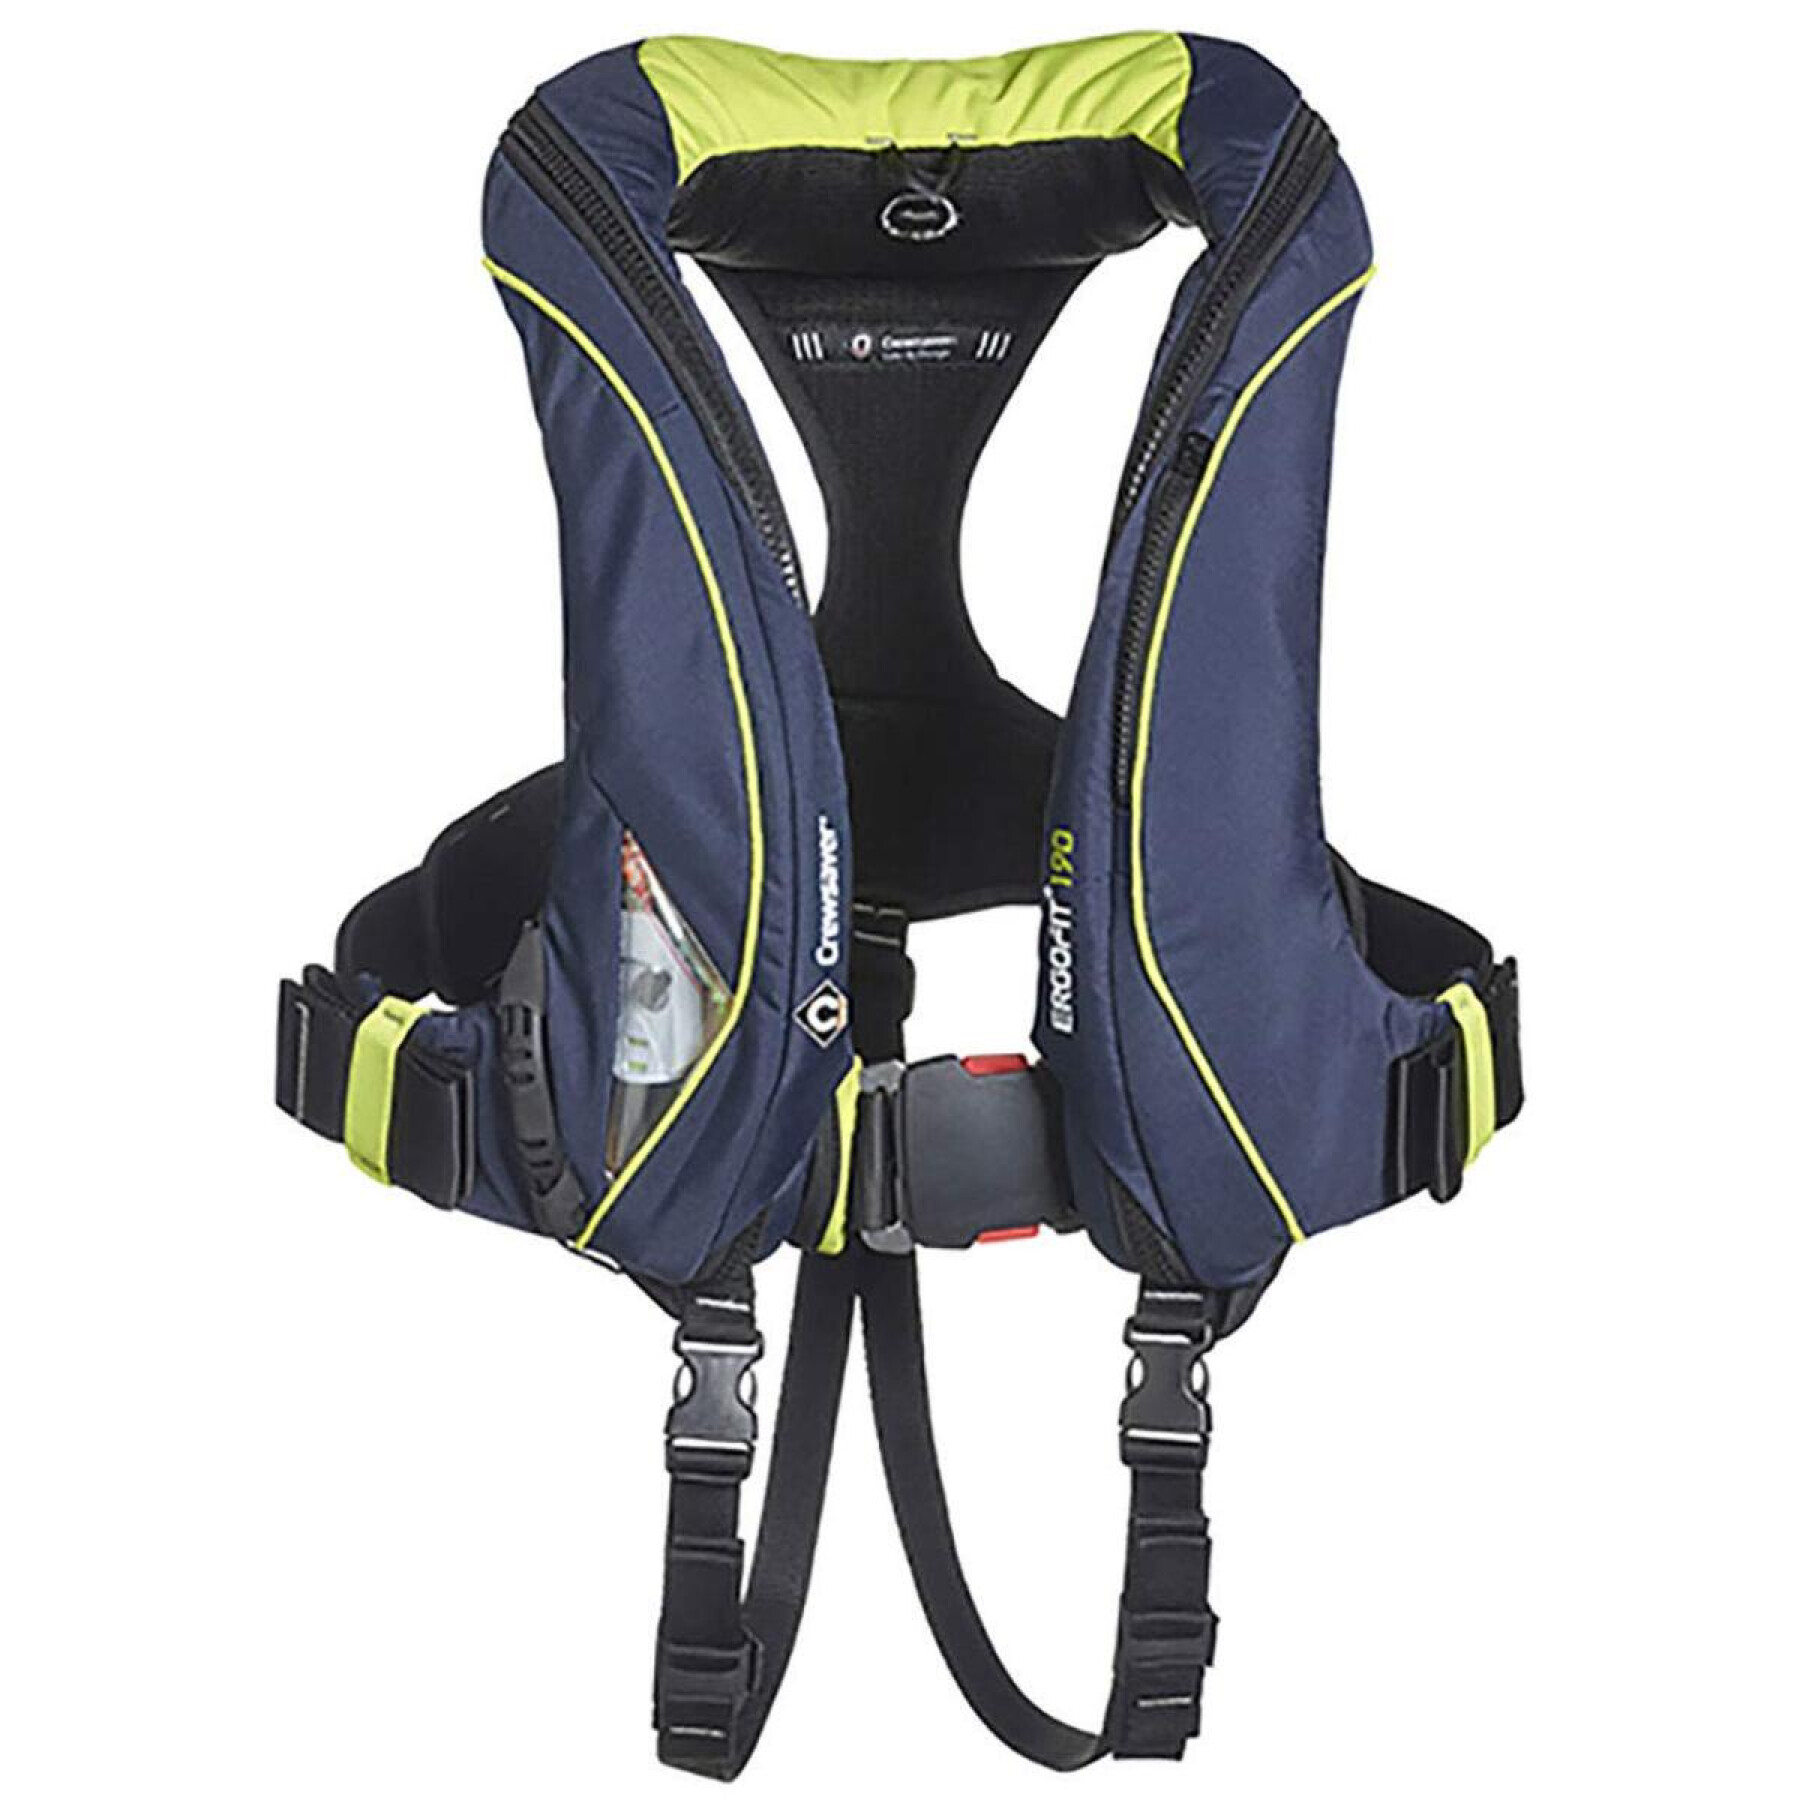 Automatic life jacket with harness, flashlight and hood Crewsaver ERGOFIT+ 290N